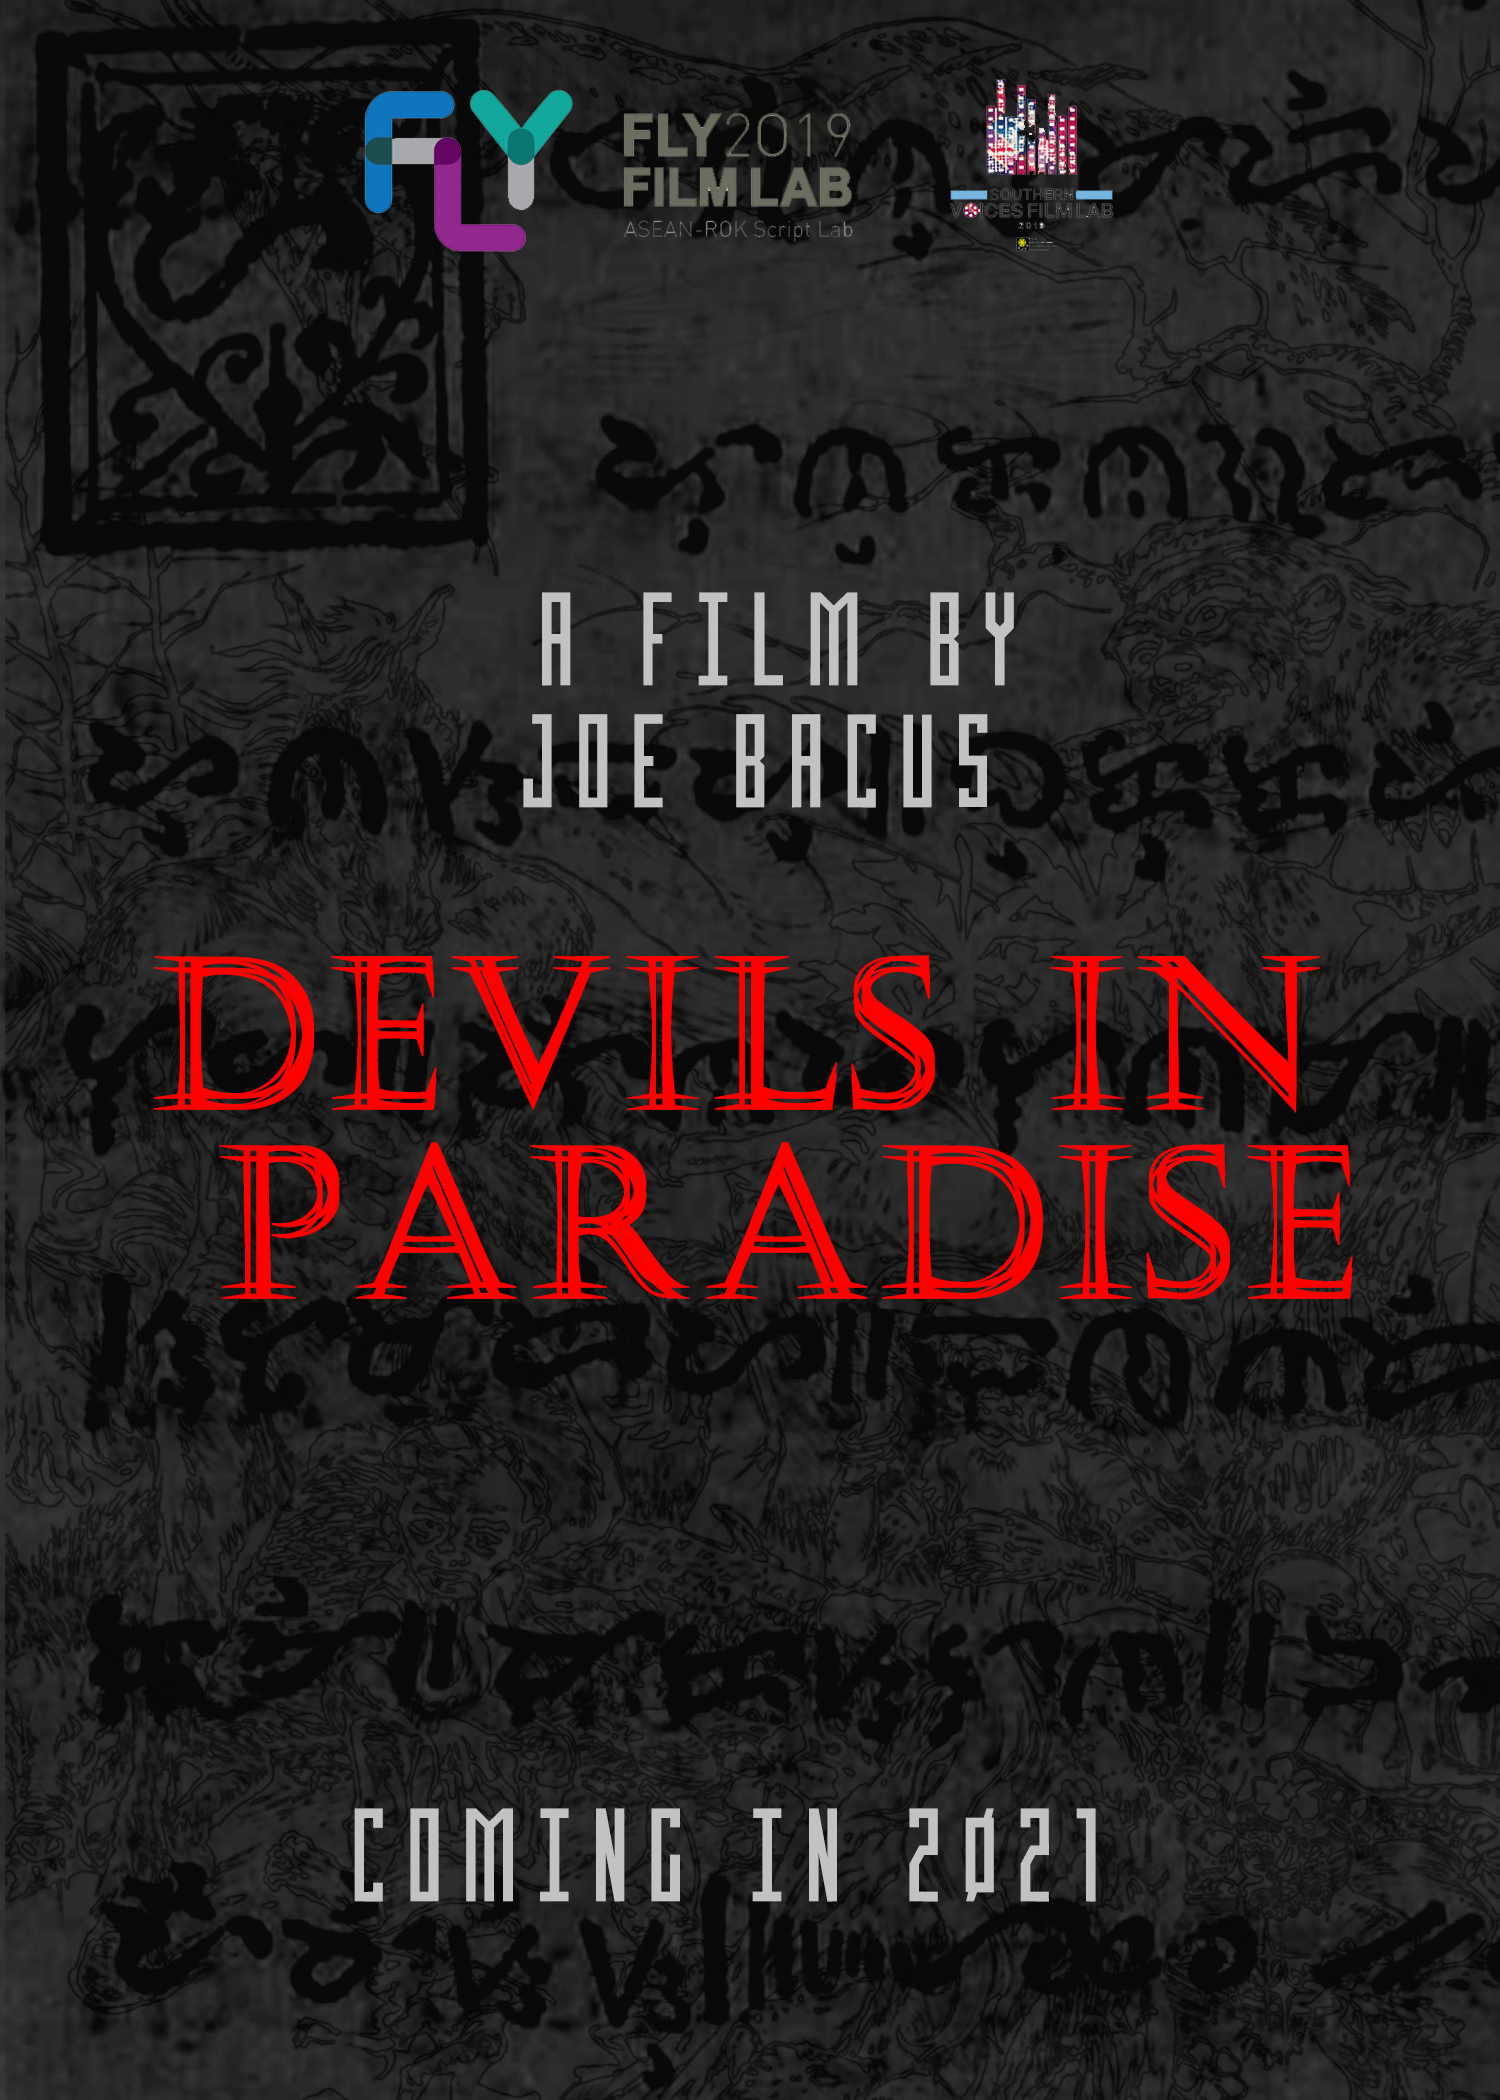 DEVILS IN PARADISE poster copy